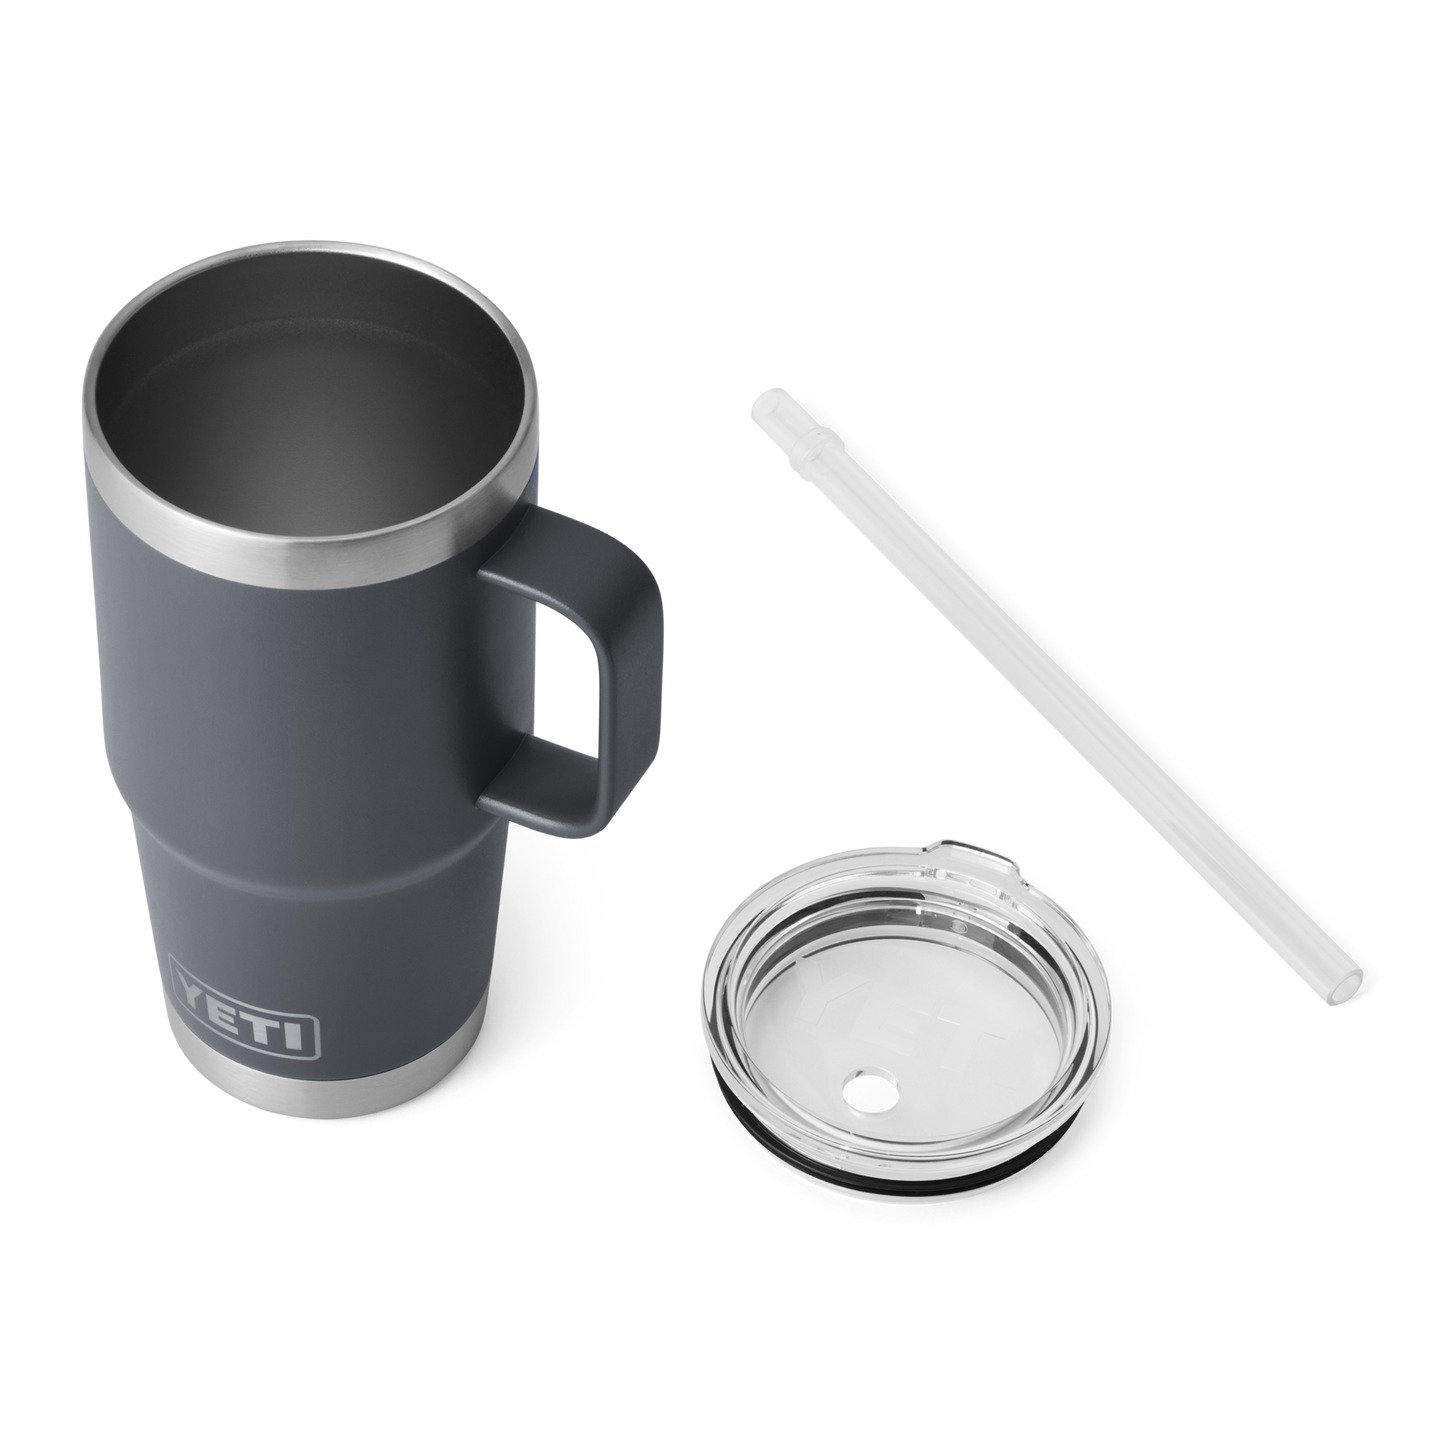 YETI Rambler® 25 oz (739ml) Straw Mug Charcoal